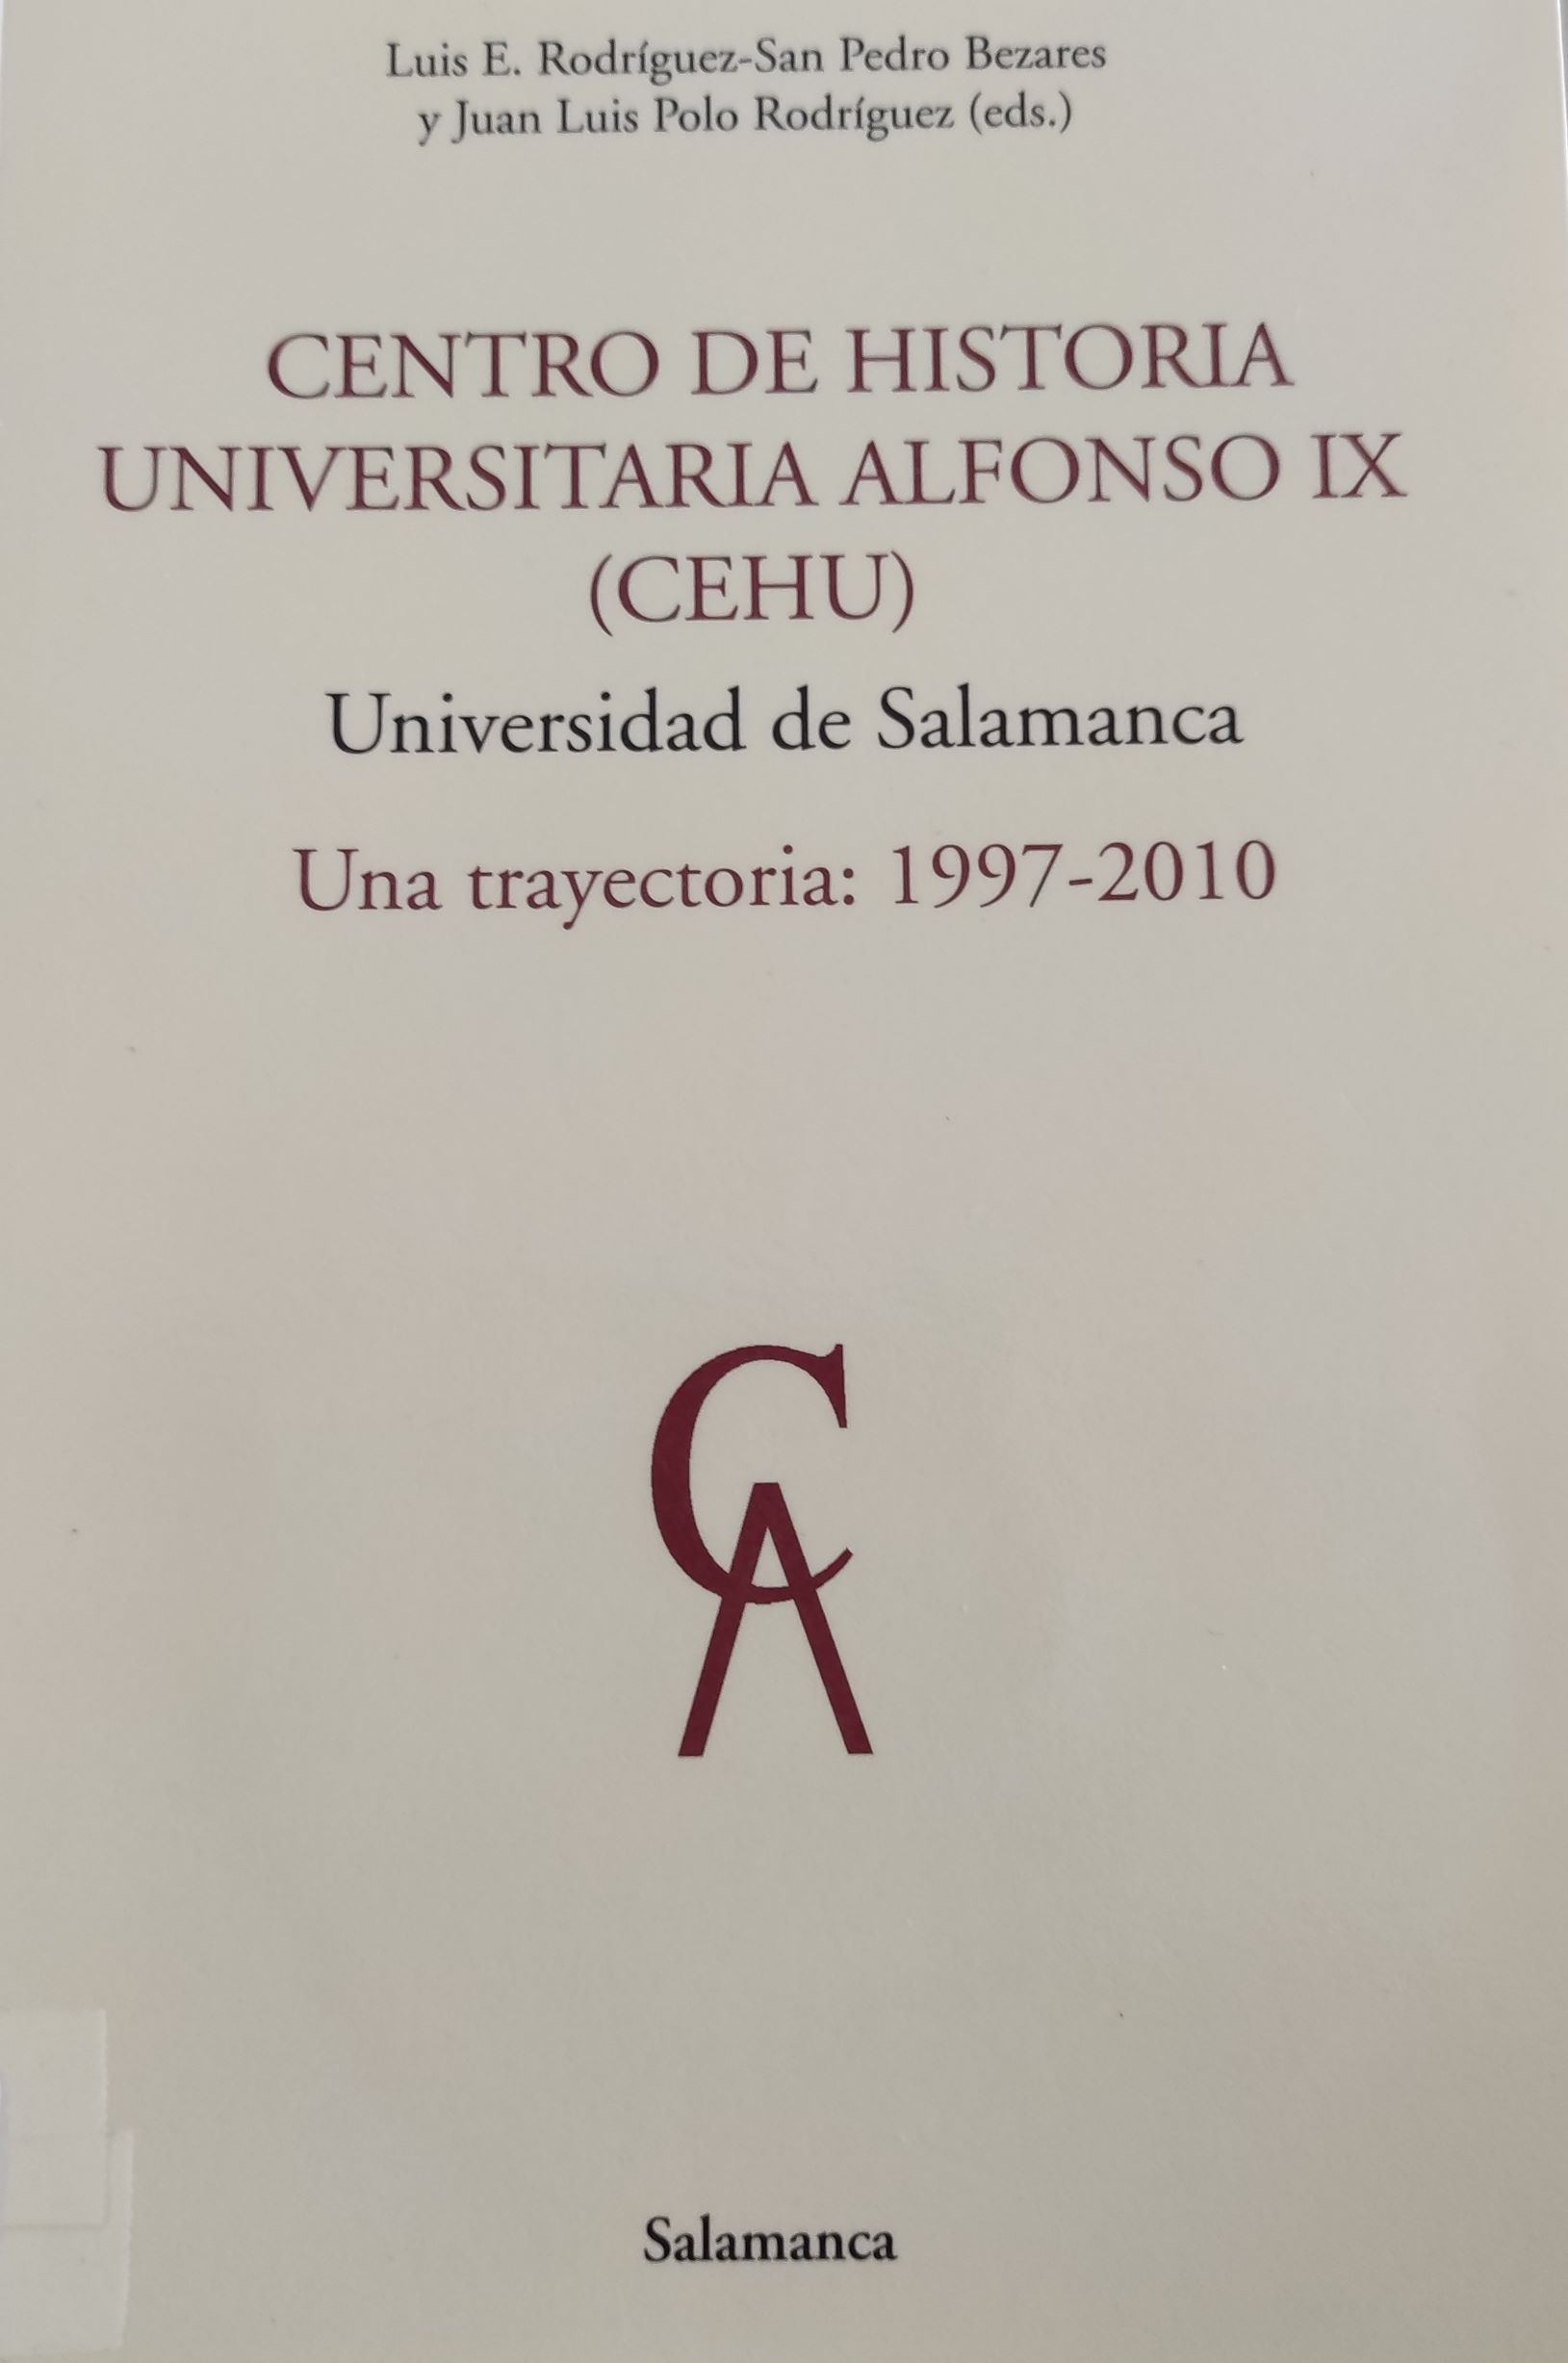 Imagen de portada del libro Centro de Historia Universitaria Alfonso IX (CEHU)